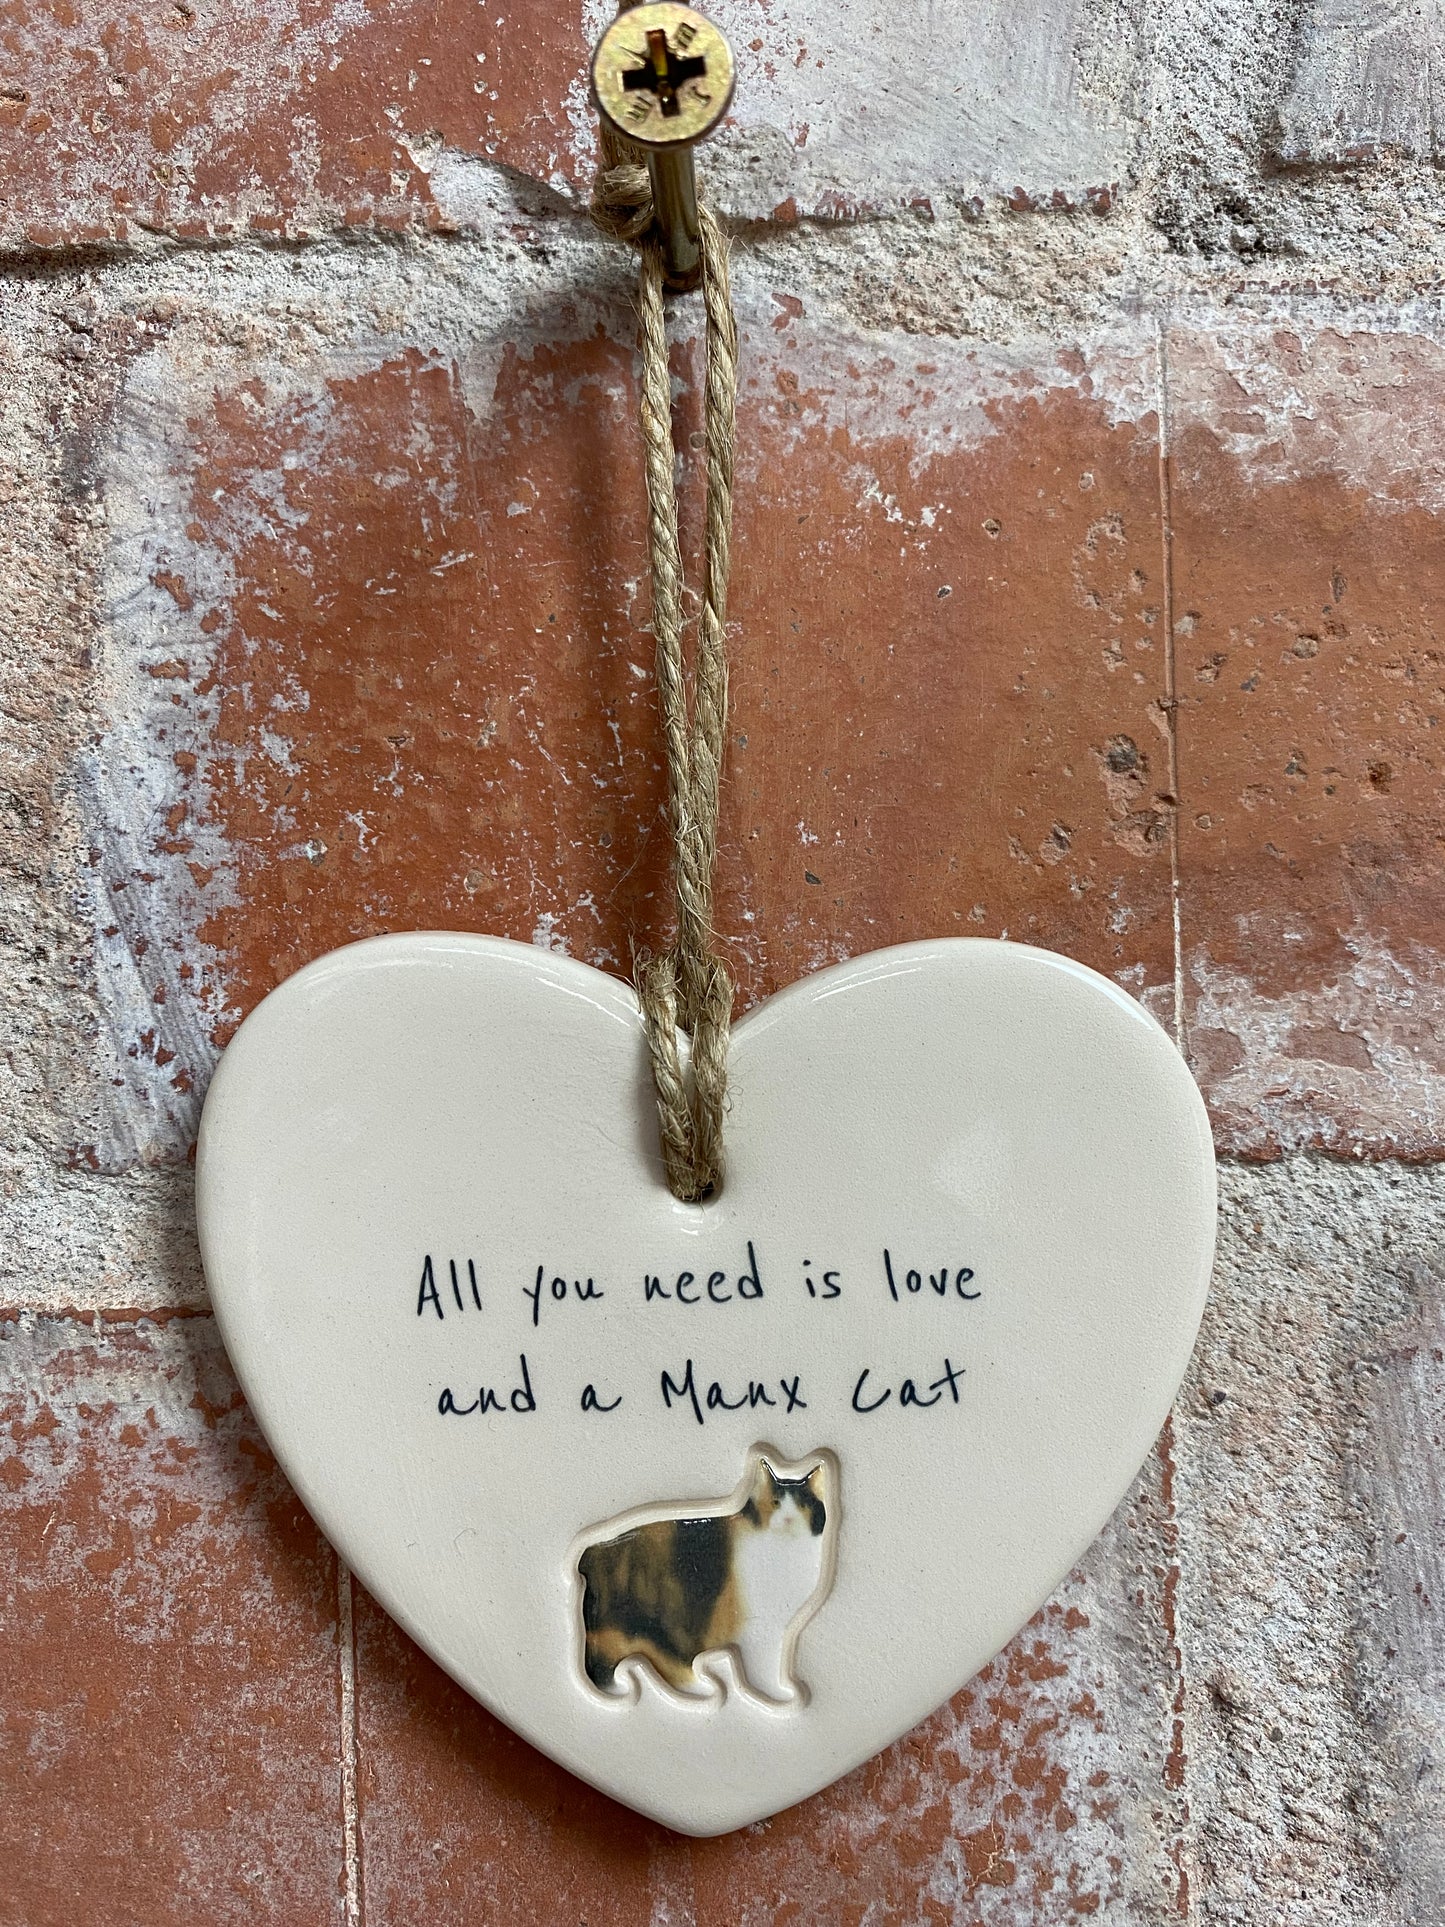 Manx Cat ceramic heart